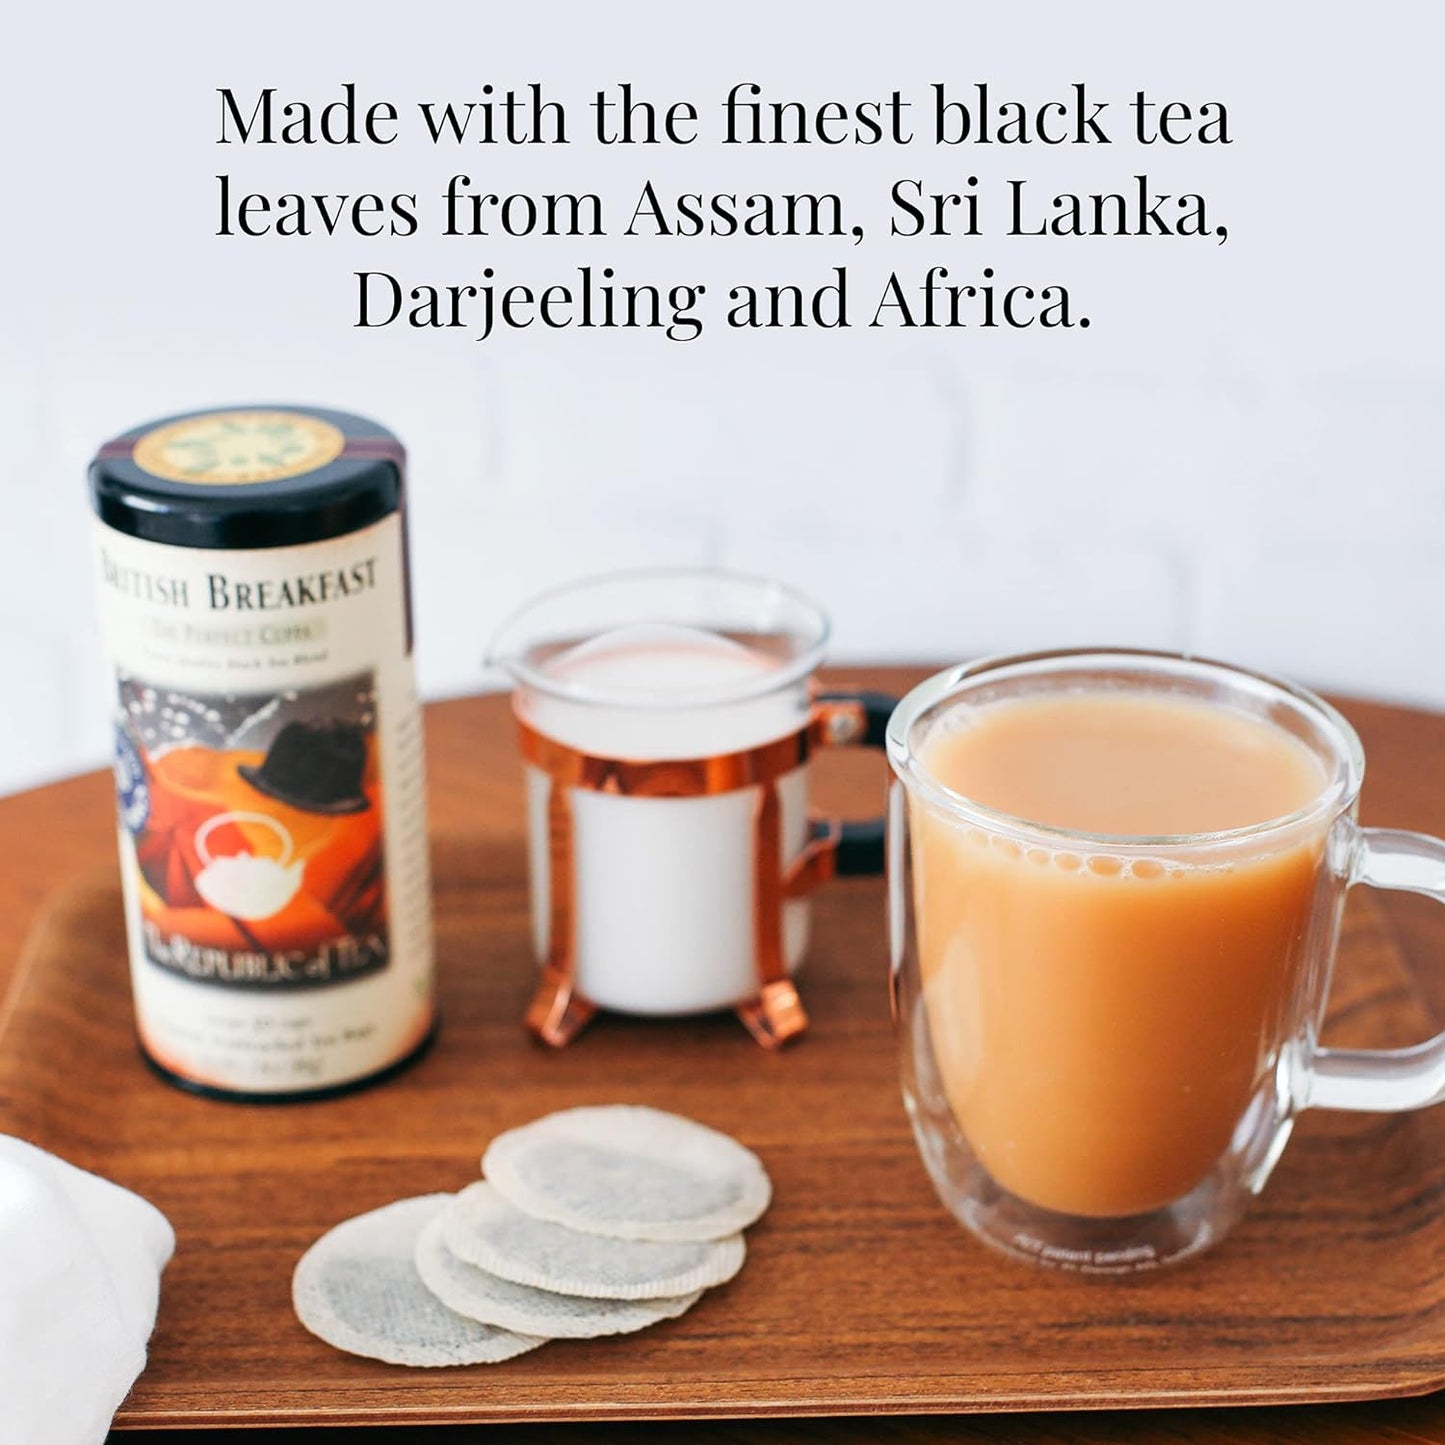 The Republic Of Tea British Breakfast Black Tea, 50 Tea Bags, Gourmet Blend, Non-GMO Project Verified